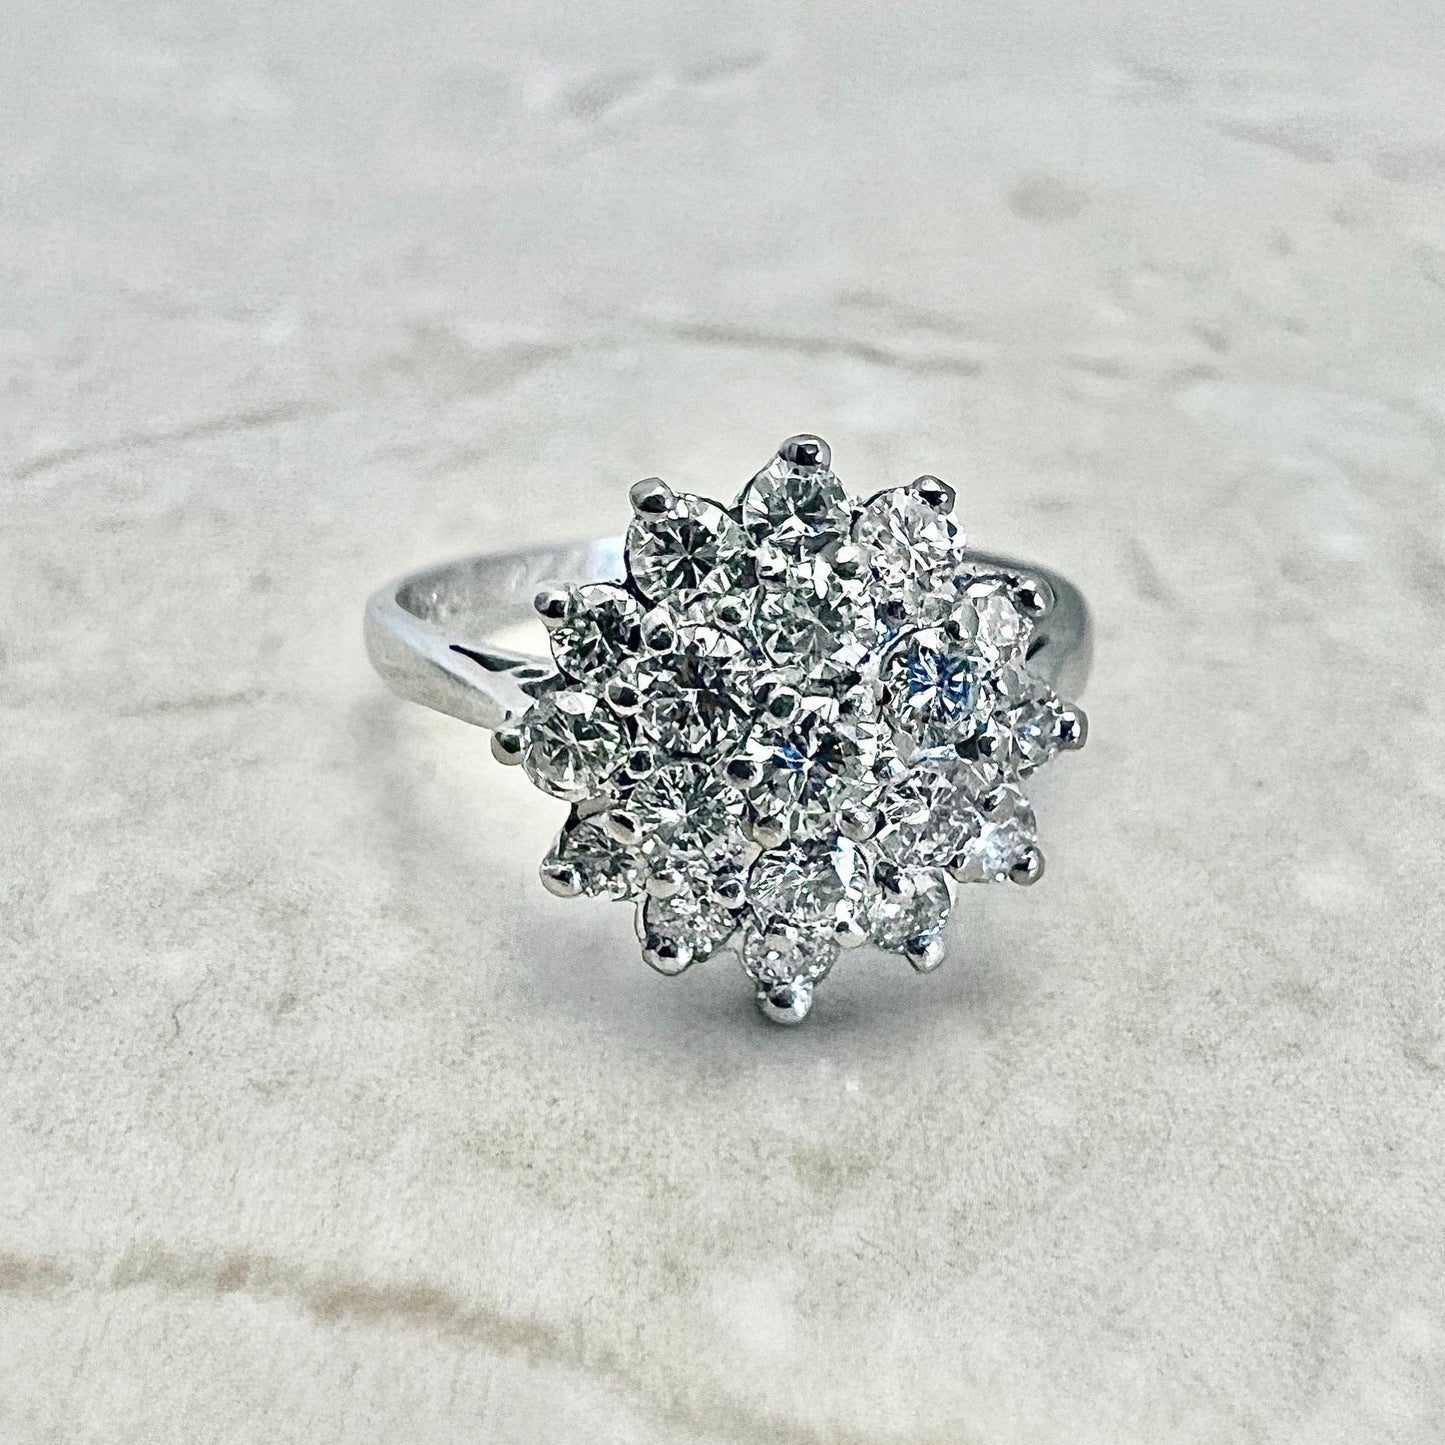 1 CT Vintage English 18K Diamond Cluster Ring - 1950’s White Gold Diamond Ring - Diamond Cocktail Ring - Diamond Wedding Ring - Promise Ring